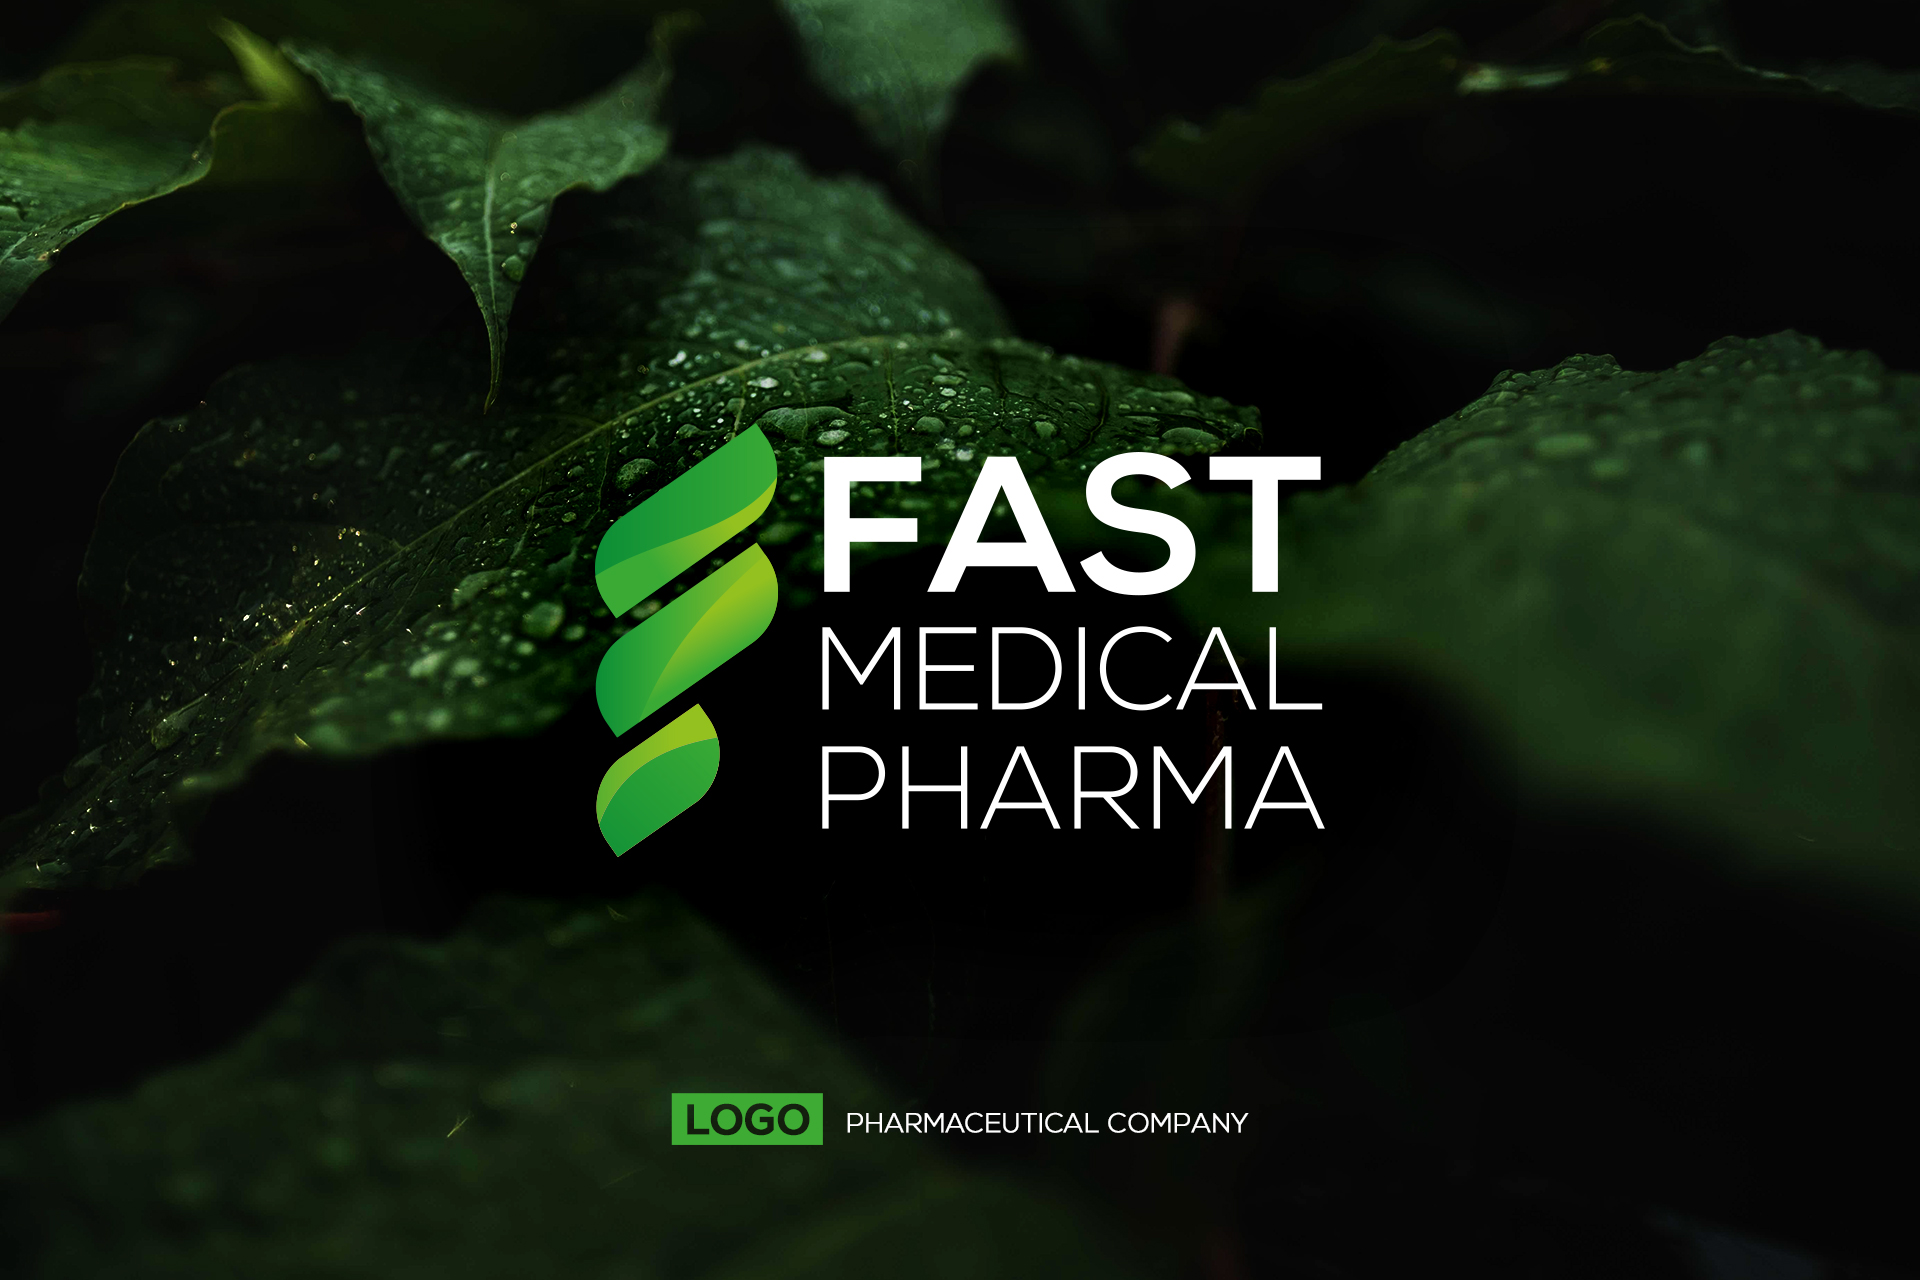 Fast Medical Pharma logo